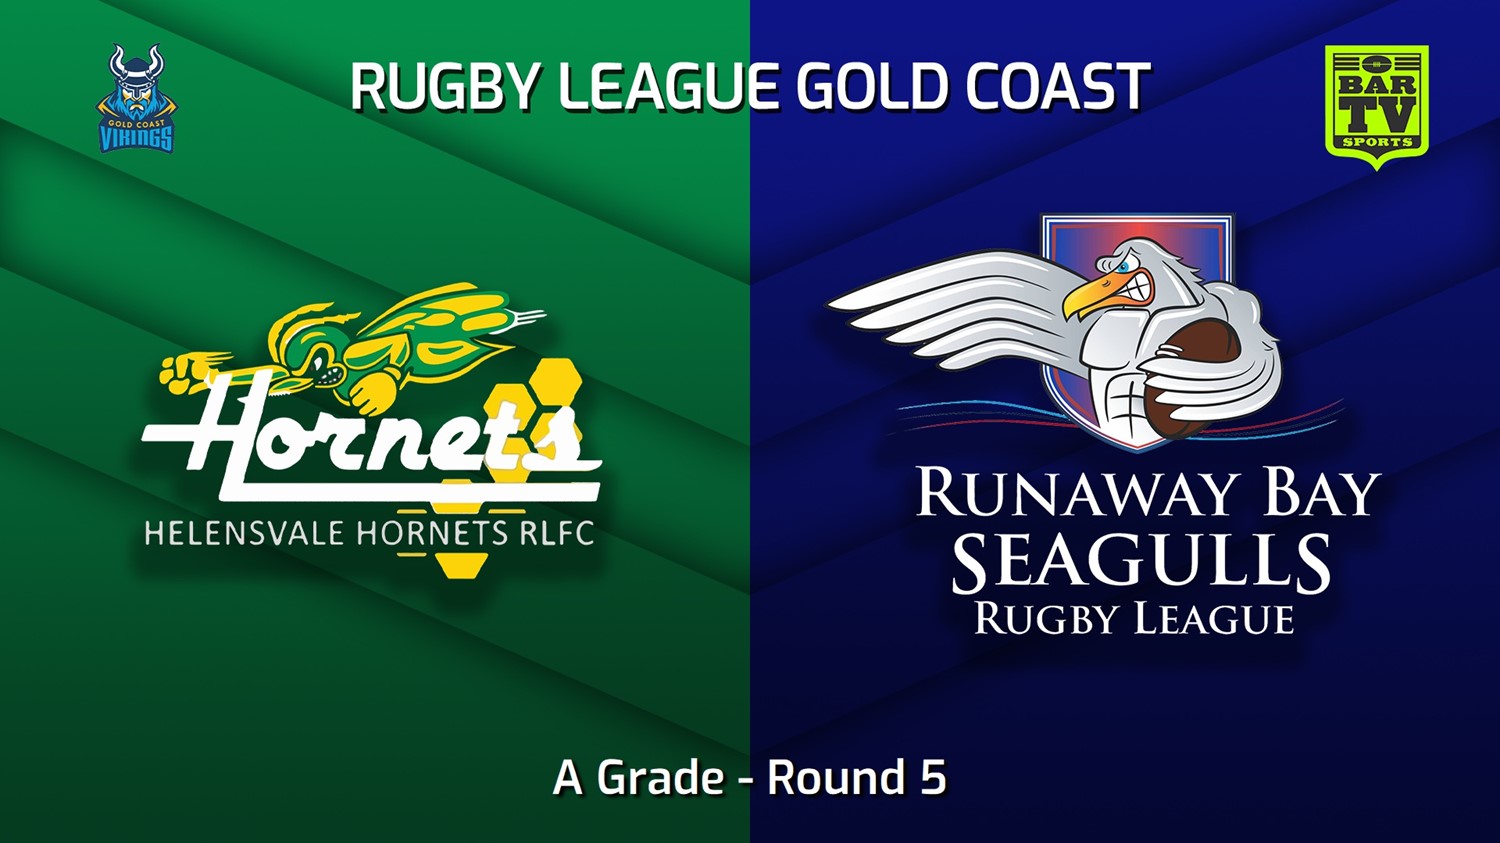 230521-Gold Coast Round 5 - A Grade - Helensvale Hornets v Runaway Bay Seagulls Minigame Slate Image